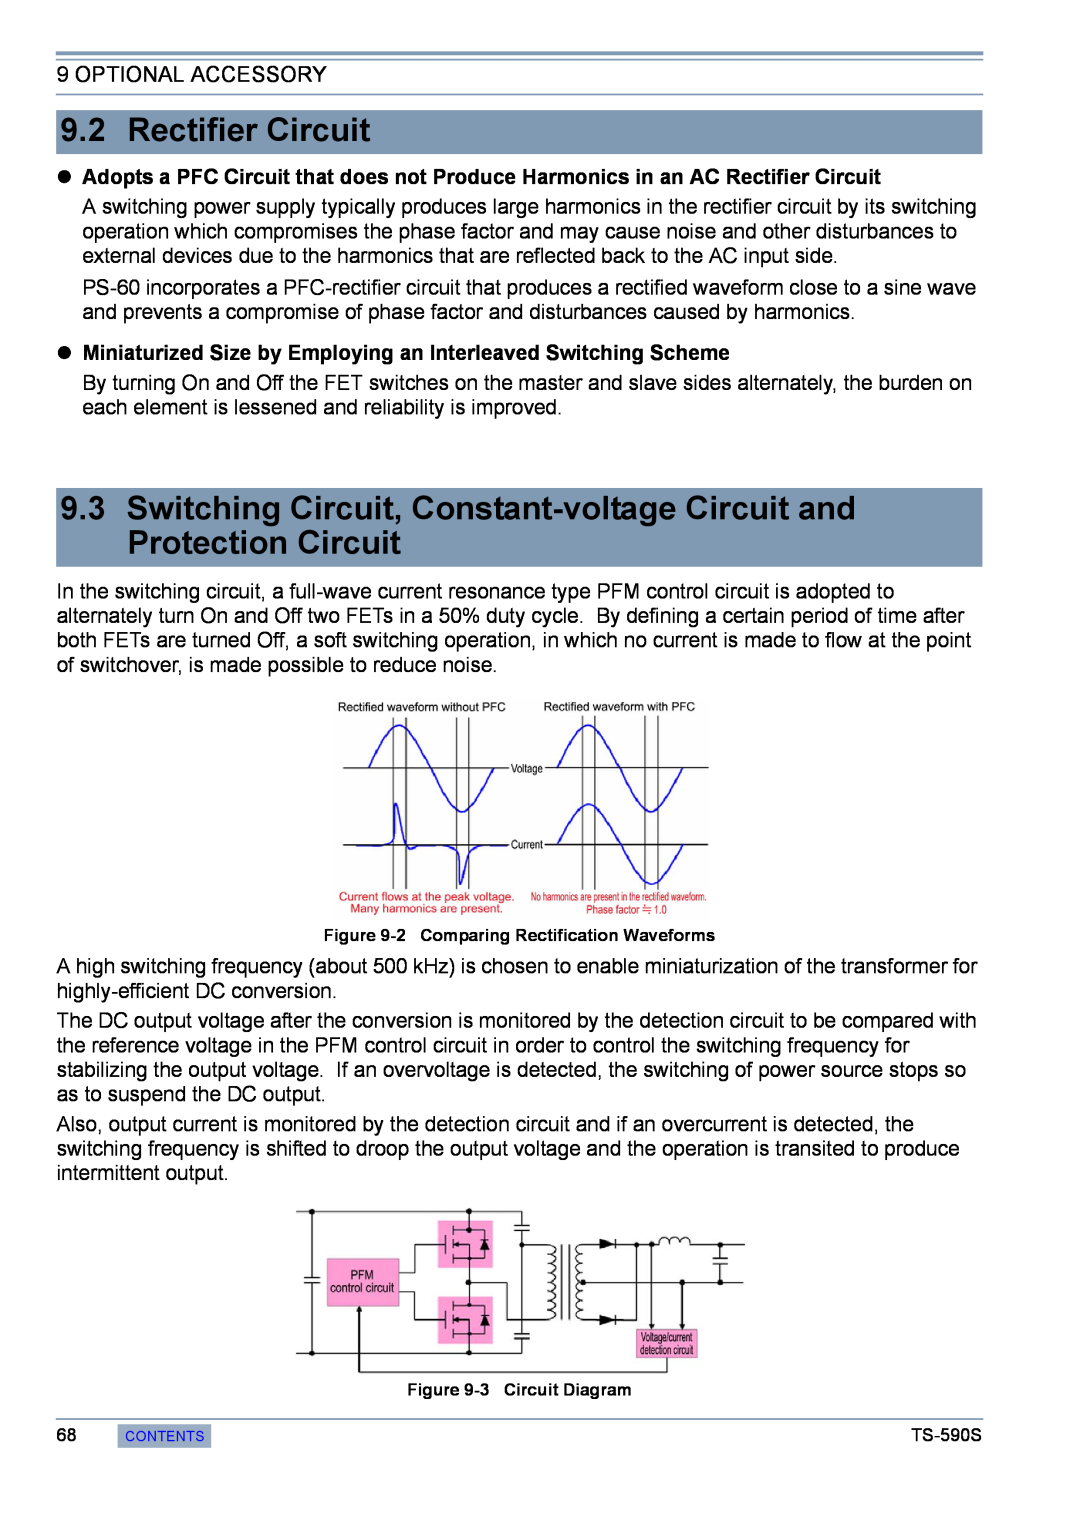 Kenwood TS-590S manual 9.2Rectifier Circuit, Optional Accessory 